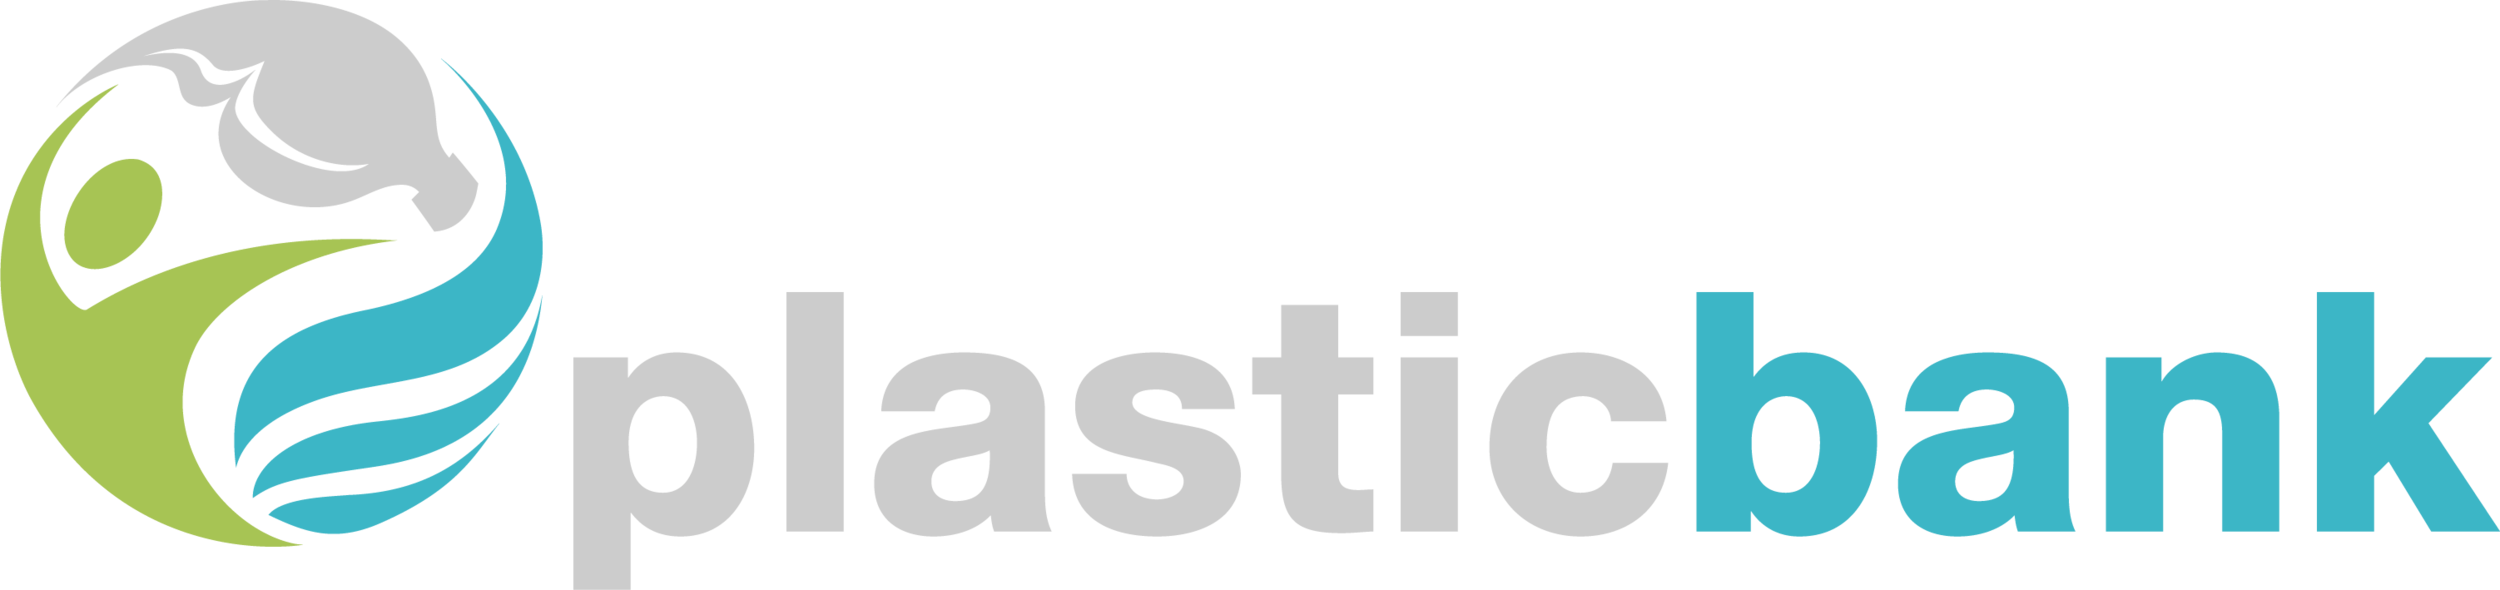 Plastic Bank Logo 2020.png